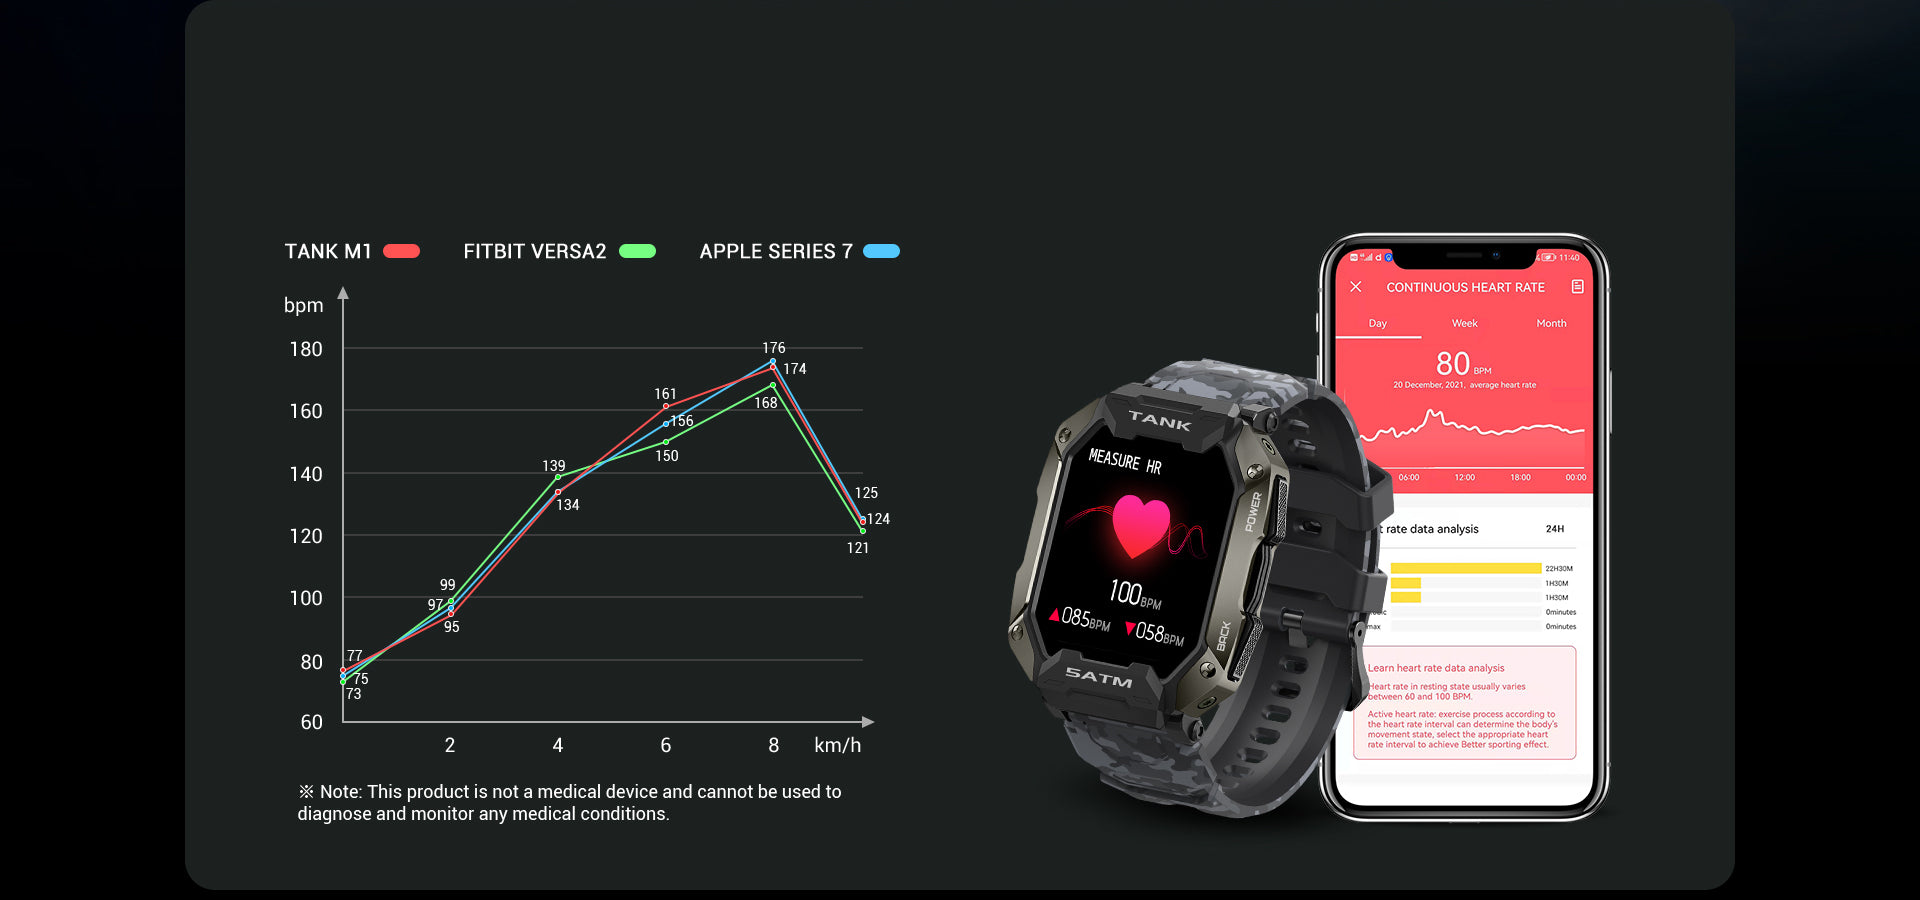 KOSPET TANK M1 Smartwatch υποστηρίζει 24ωρο μόνιτορ καρδιακού παλμού, δυναμική προειδοποίηση καρδιακών παλμών